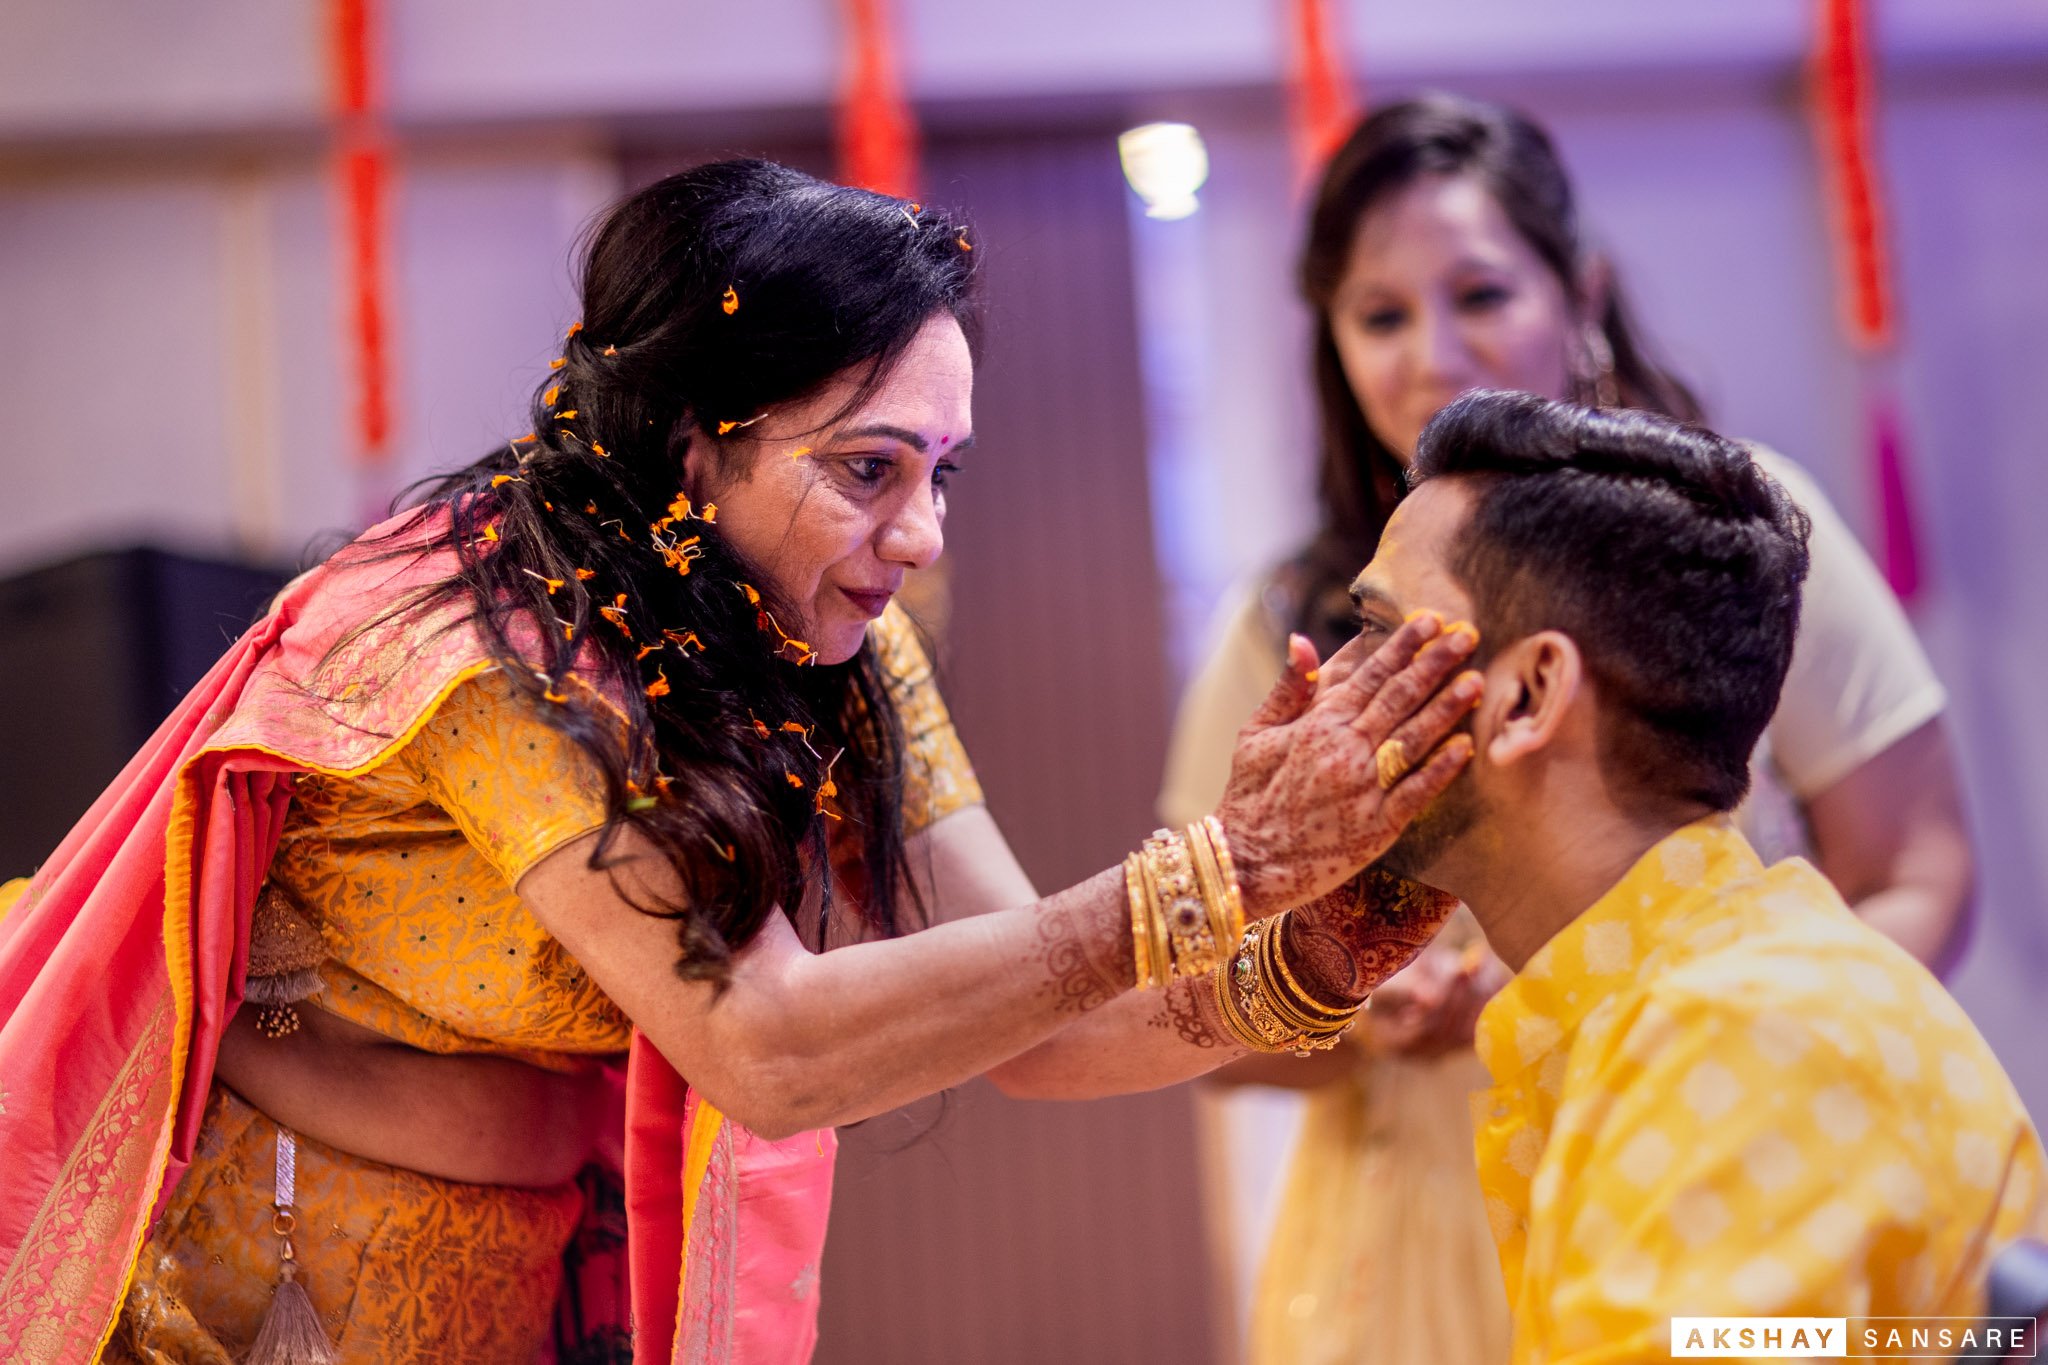 Lipika x Bhavya Compress Akshay Sansare Photography & Films Best wedding photographers in mumbai india-23.jpg